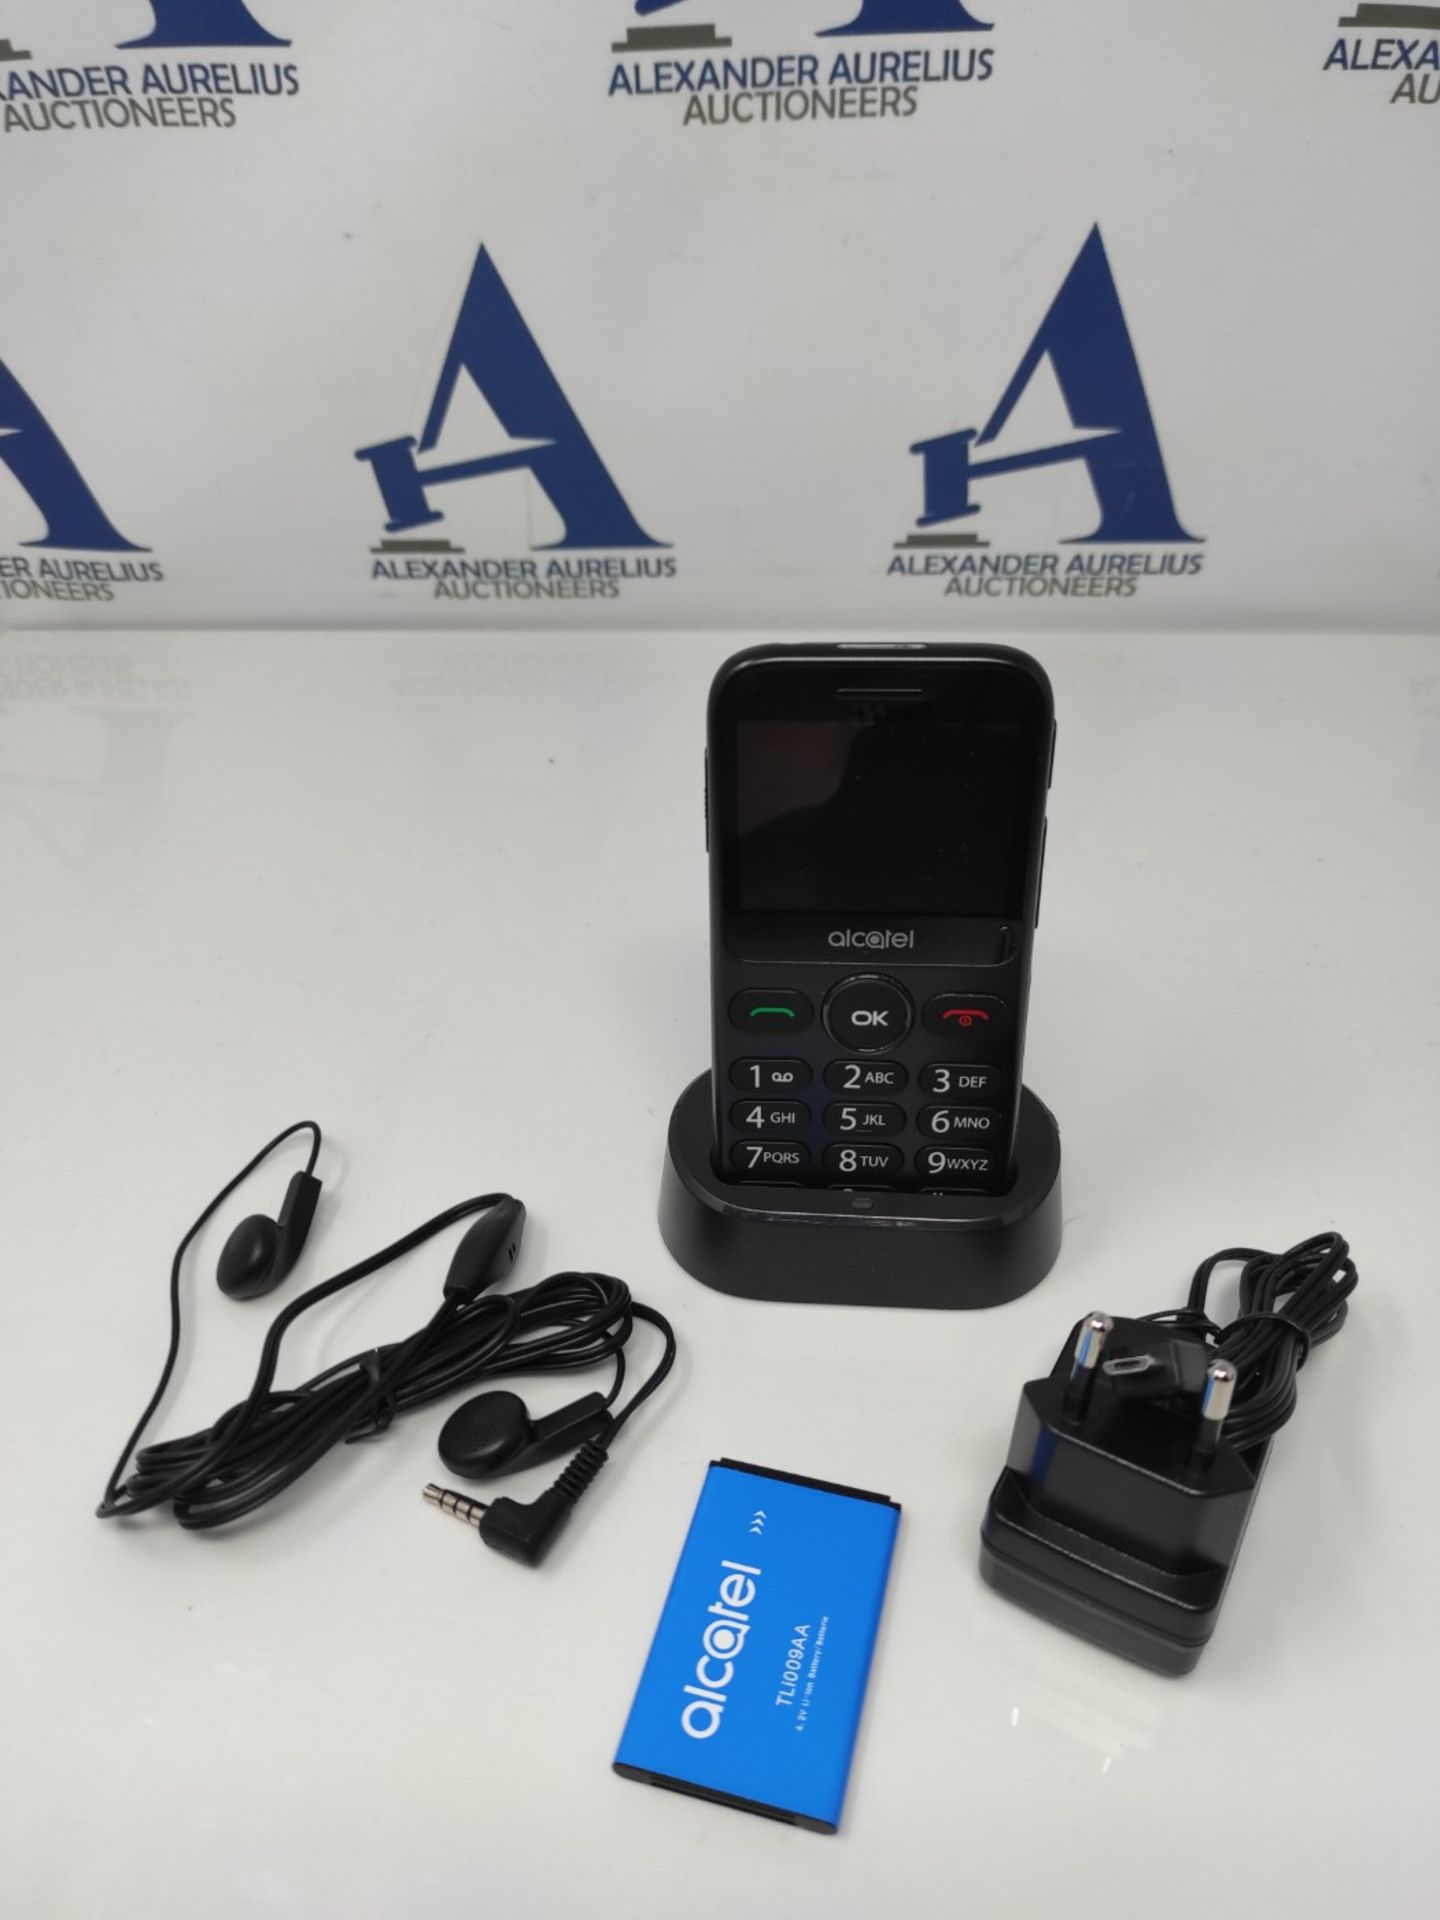 Alcatel 2020X - Mobile Phone, 2.4" Color Display, Large Buttons, SOS Button, Charging - Bild 3 aus 3